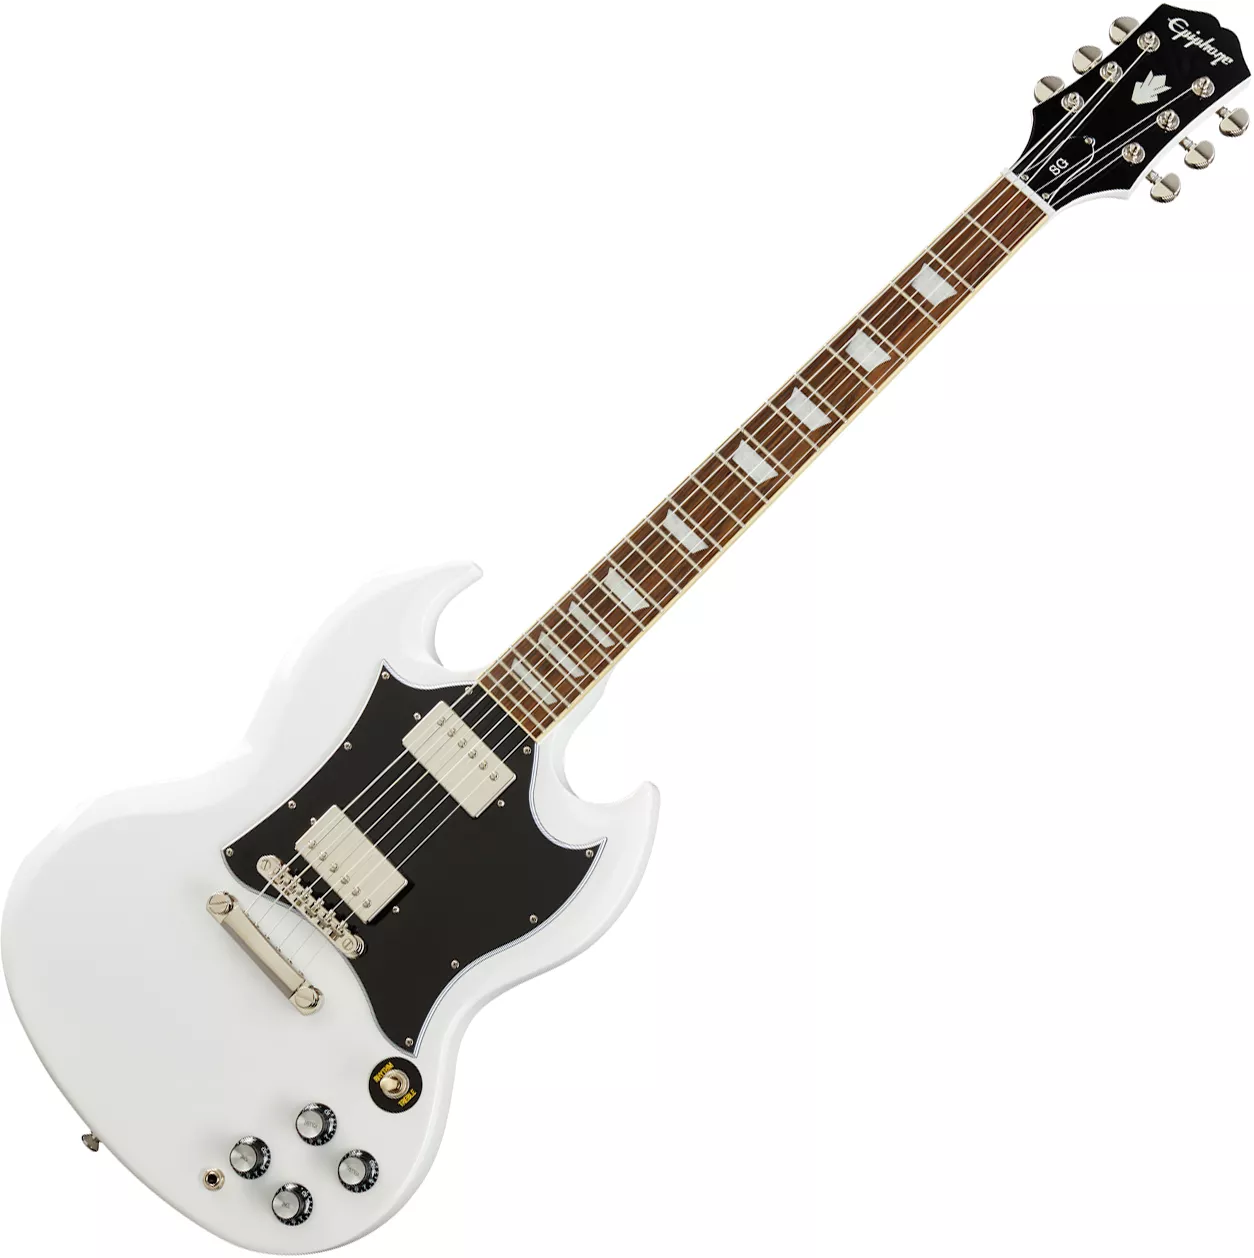 Epiphone SG Standard - alpine white Double cut electric guitar white